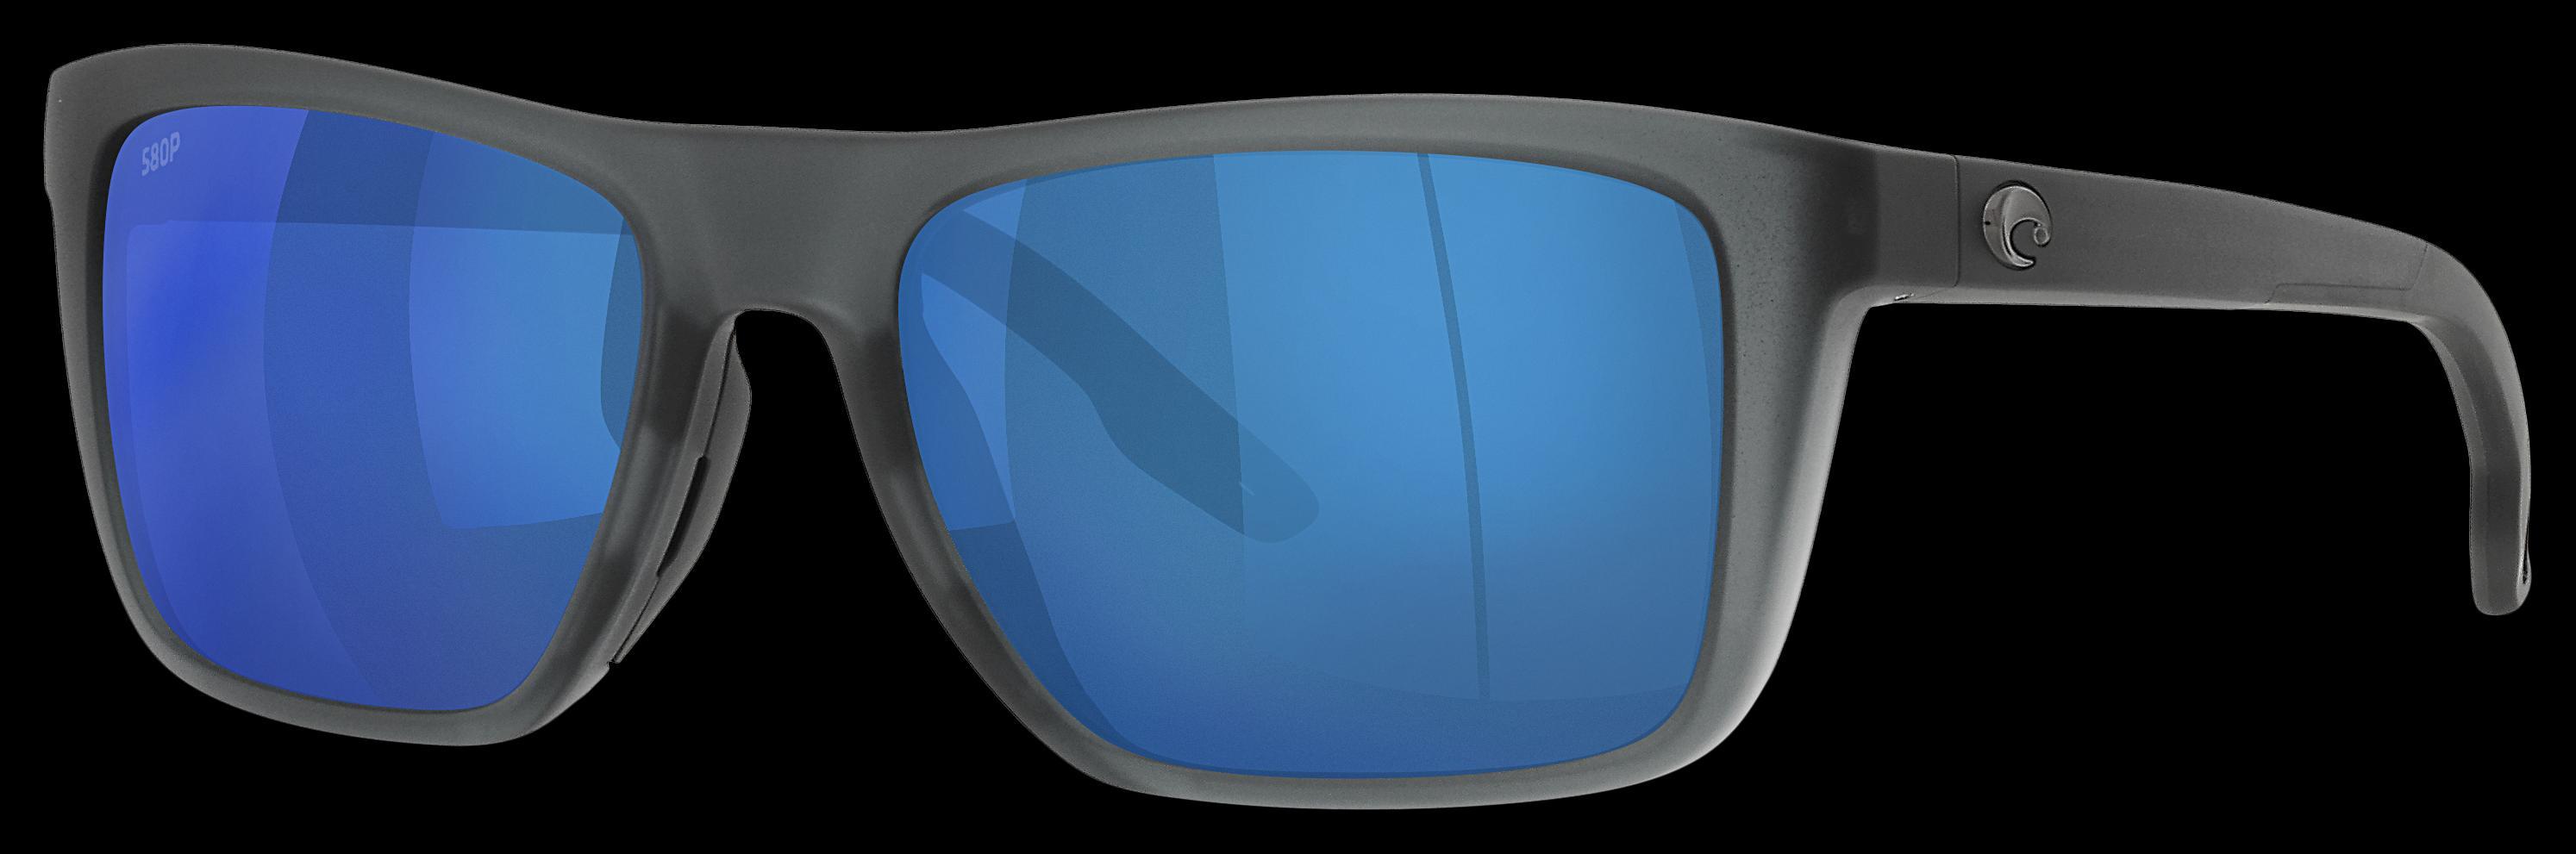 Costa Del Mar Mainsail 55mm Mirrored Polarized Rectangular Sunglasses Product Image